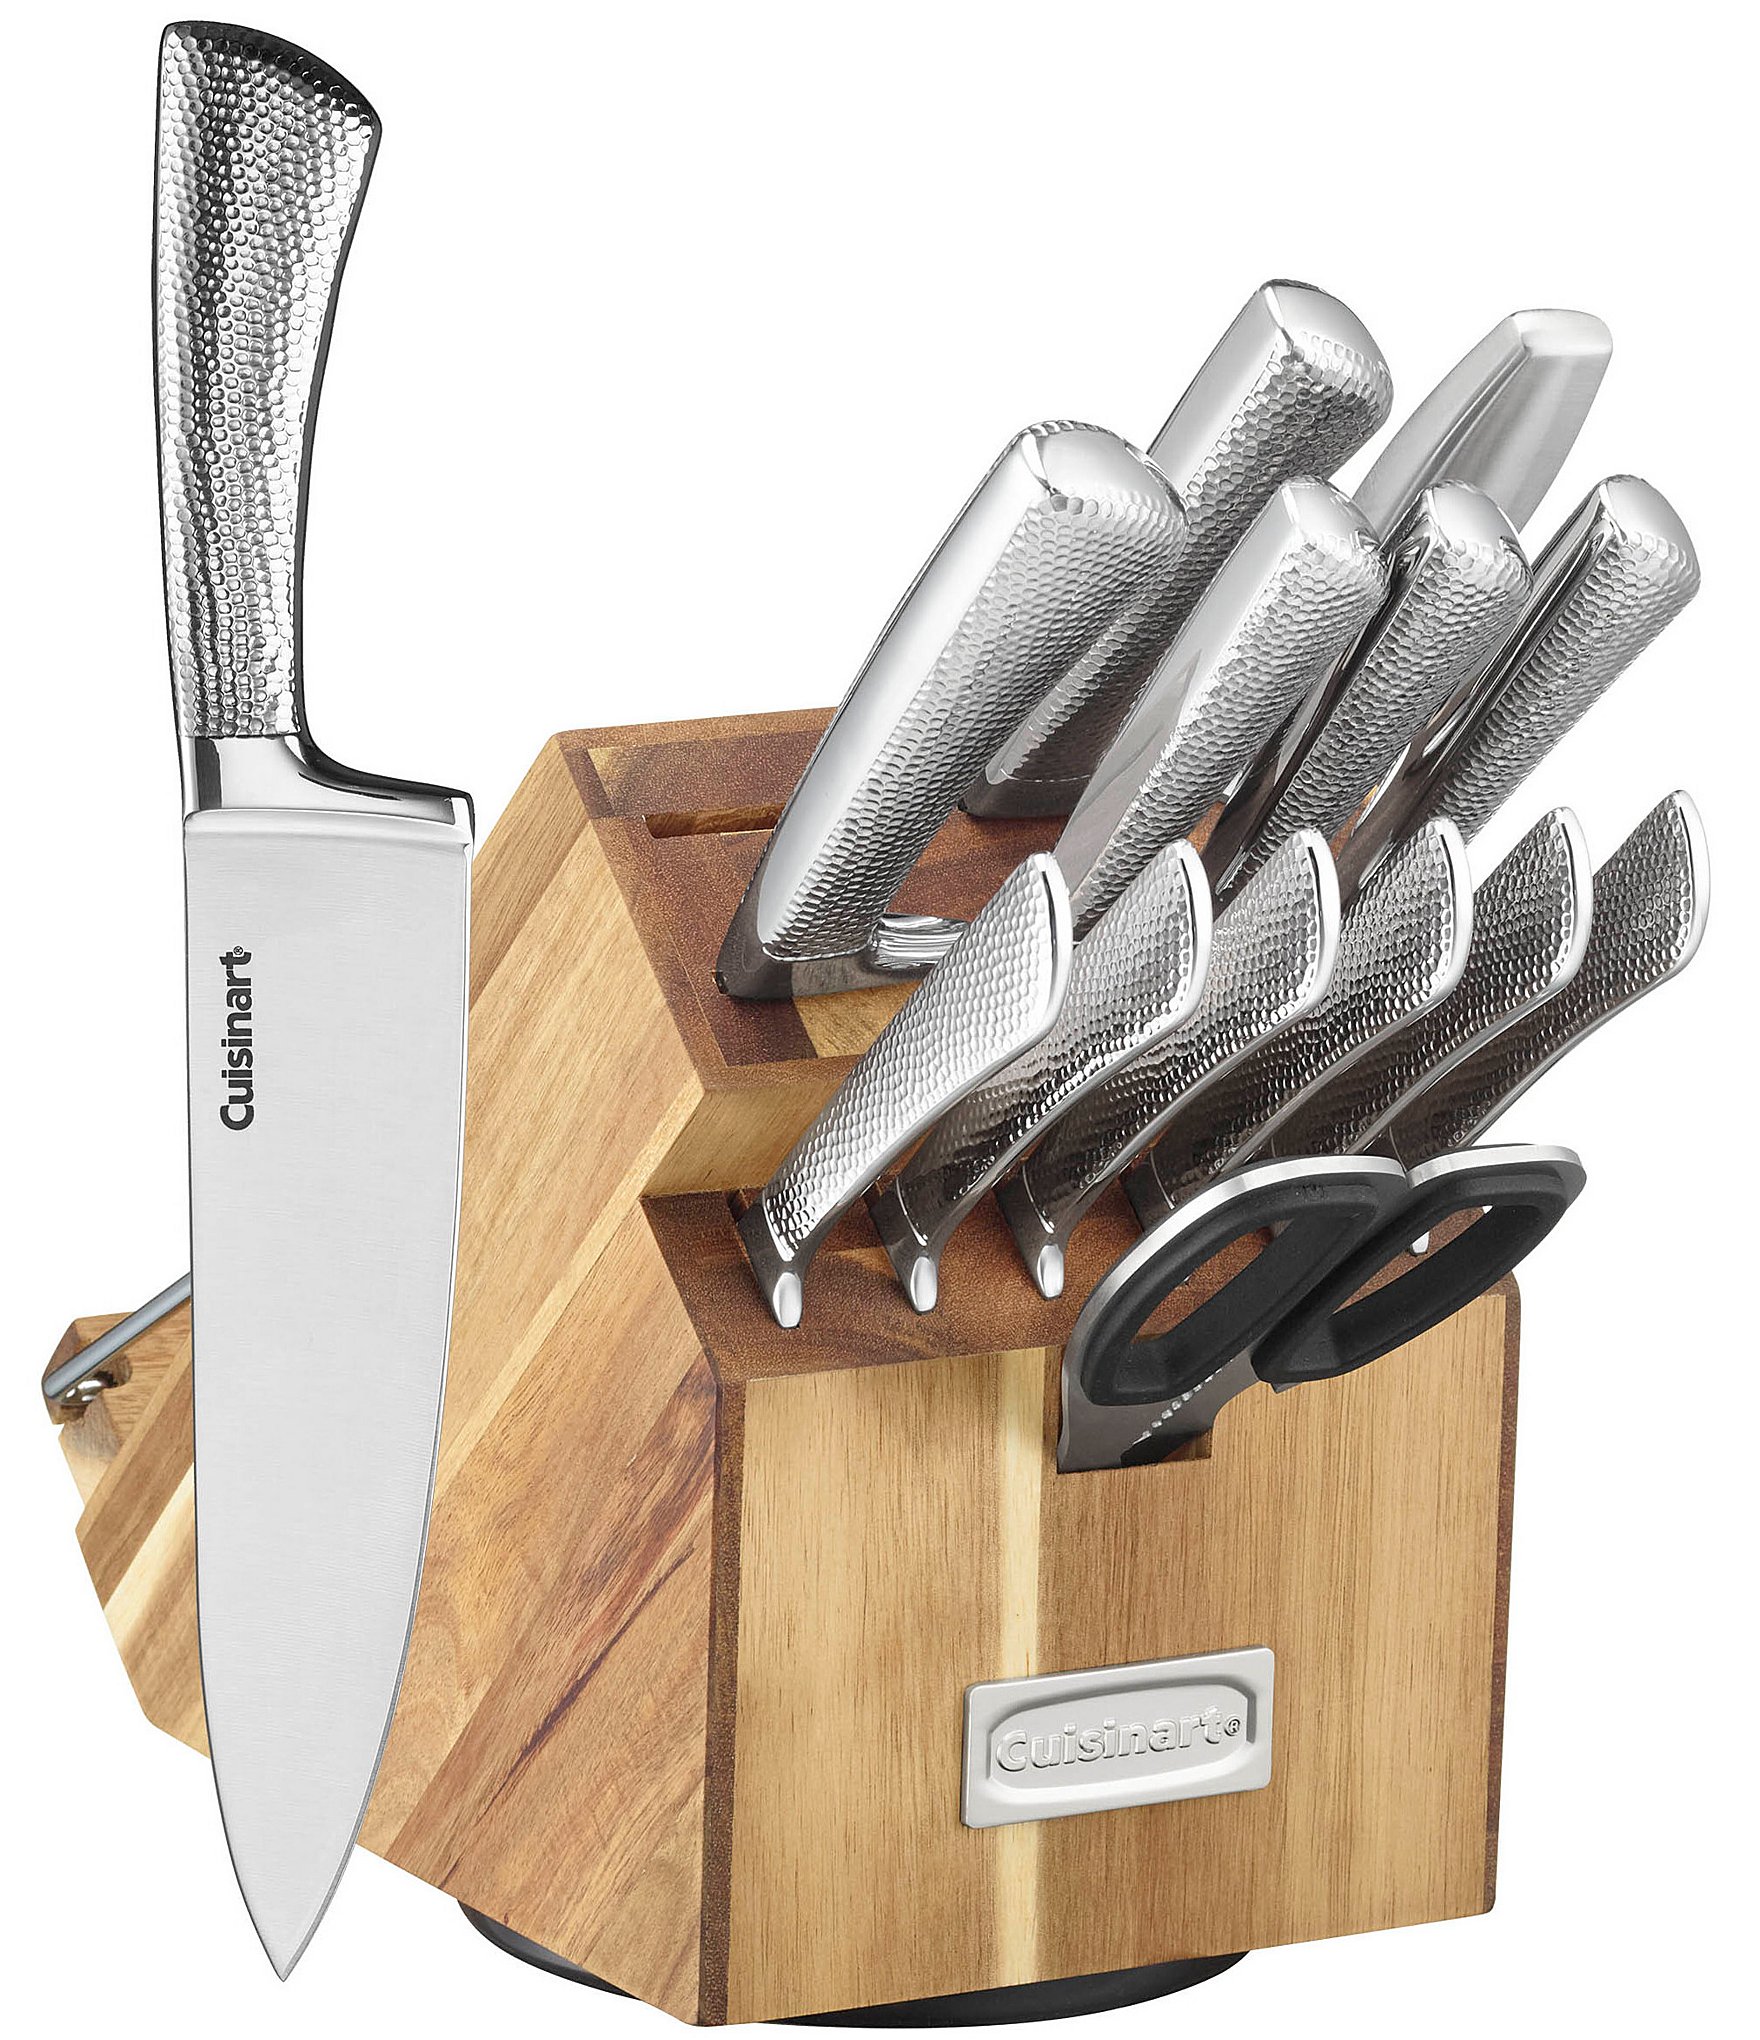 Cuisinart 15pc German Stainless Steel Hollow Handle Cutlery Block Set w/Acacia Block